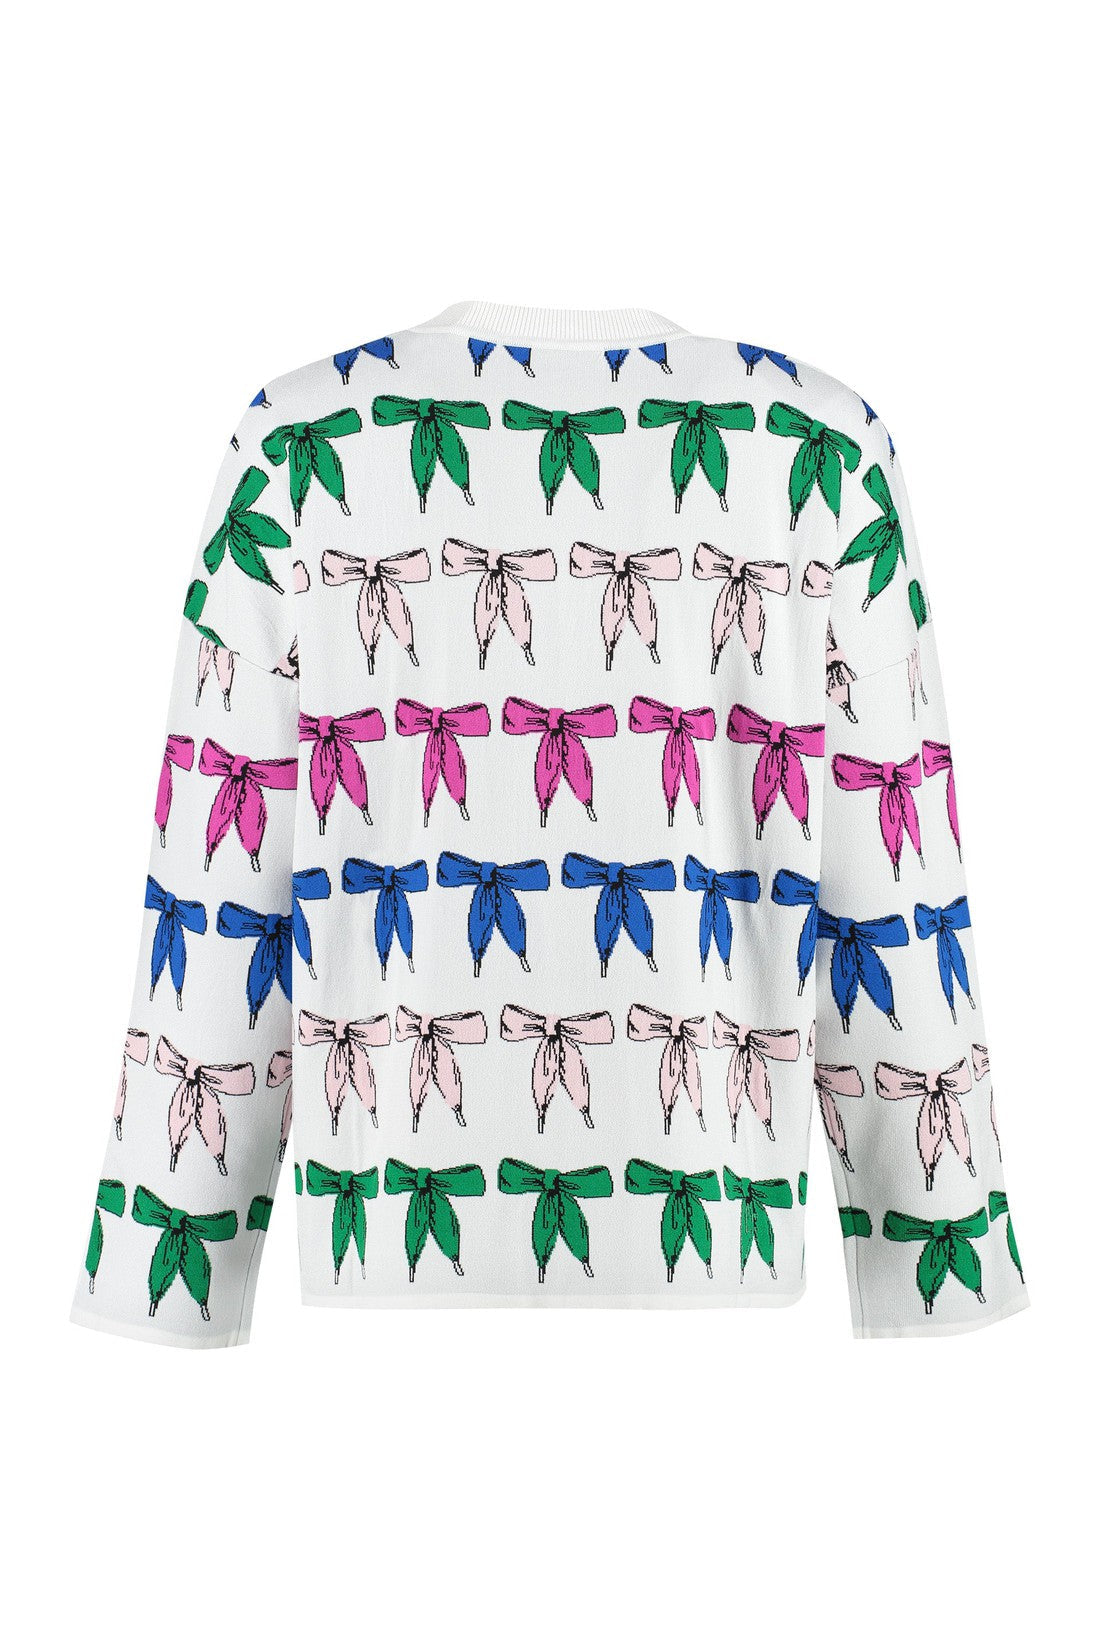 Boutique Moschino-OUTLET-SALE-Jacquard crew-neck sweater-ARCHIVIST